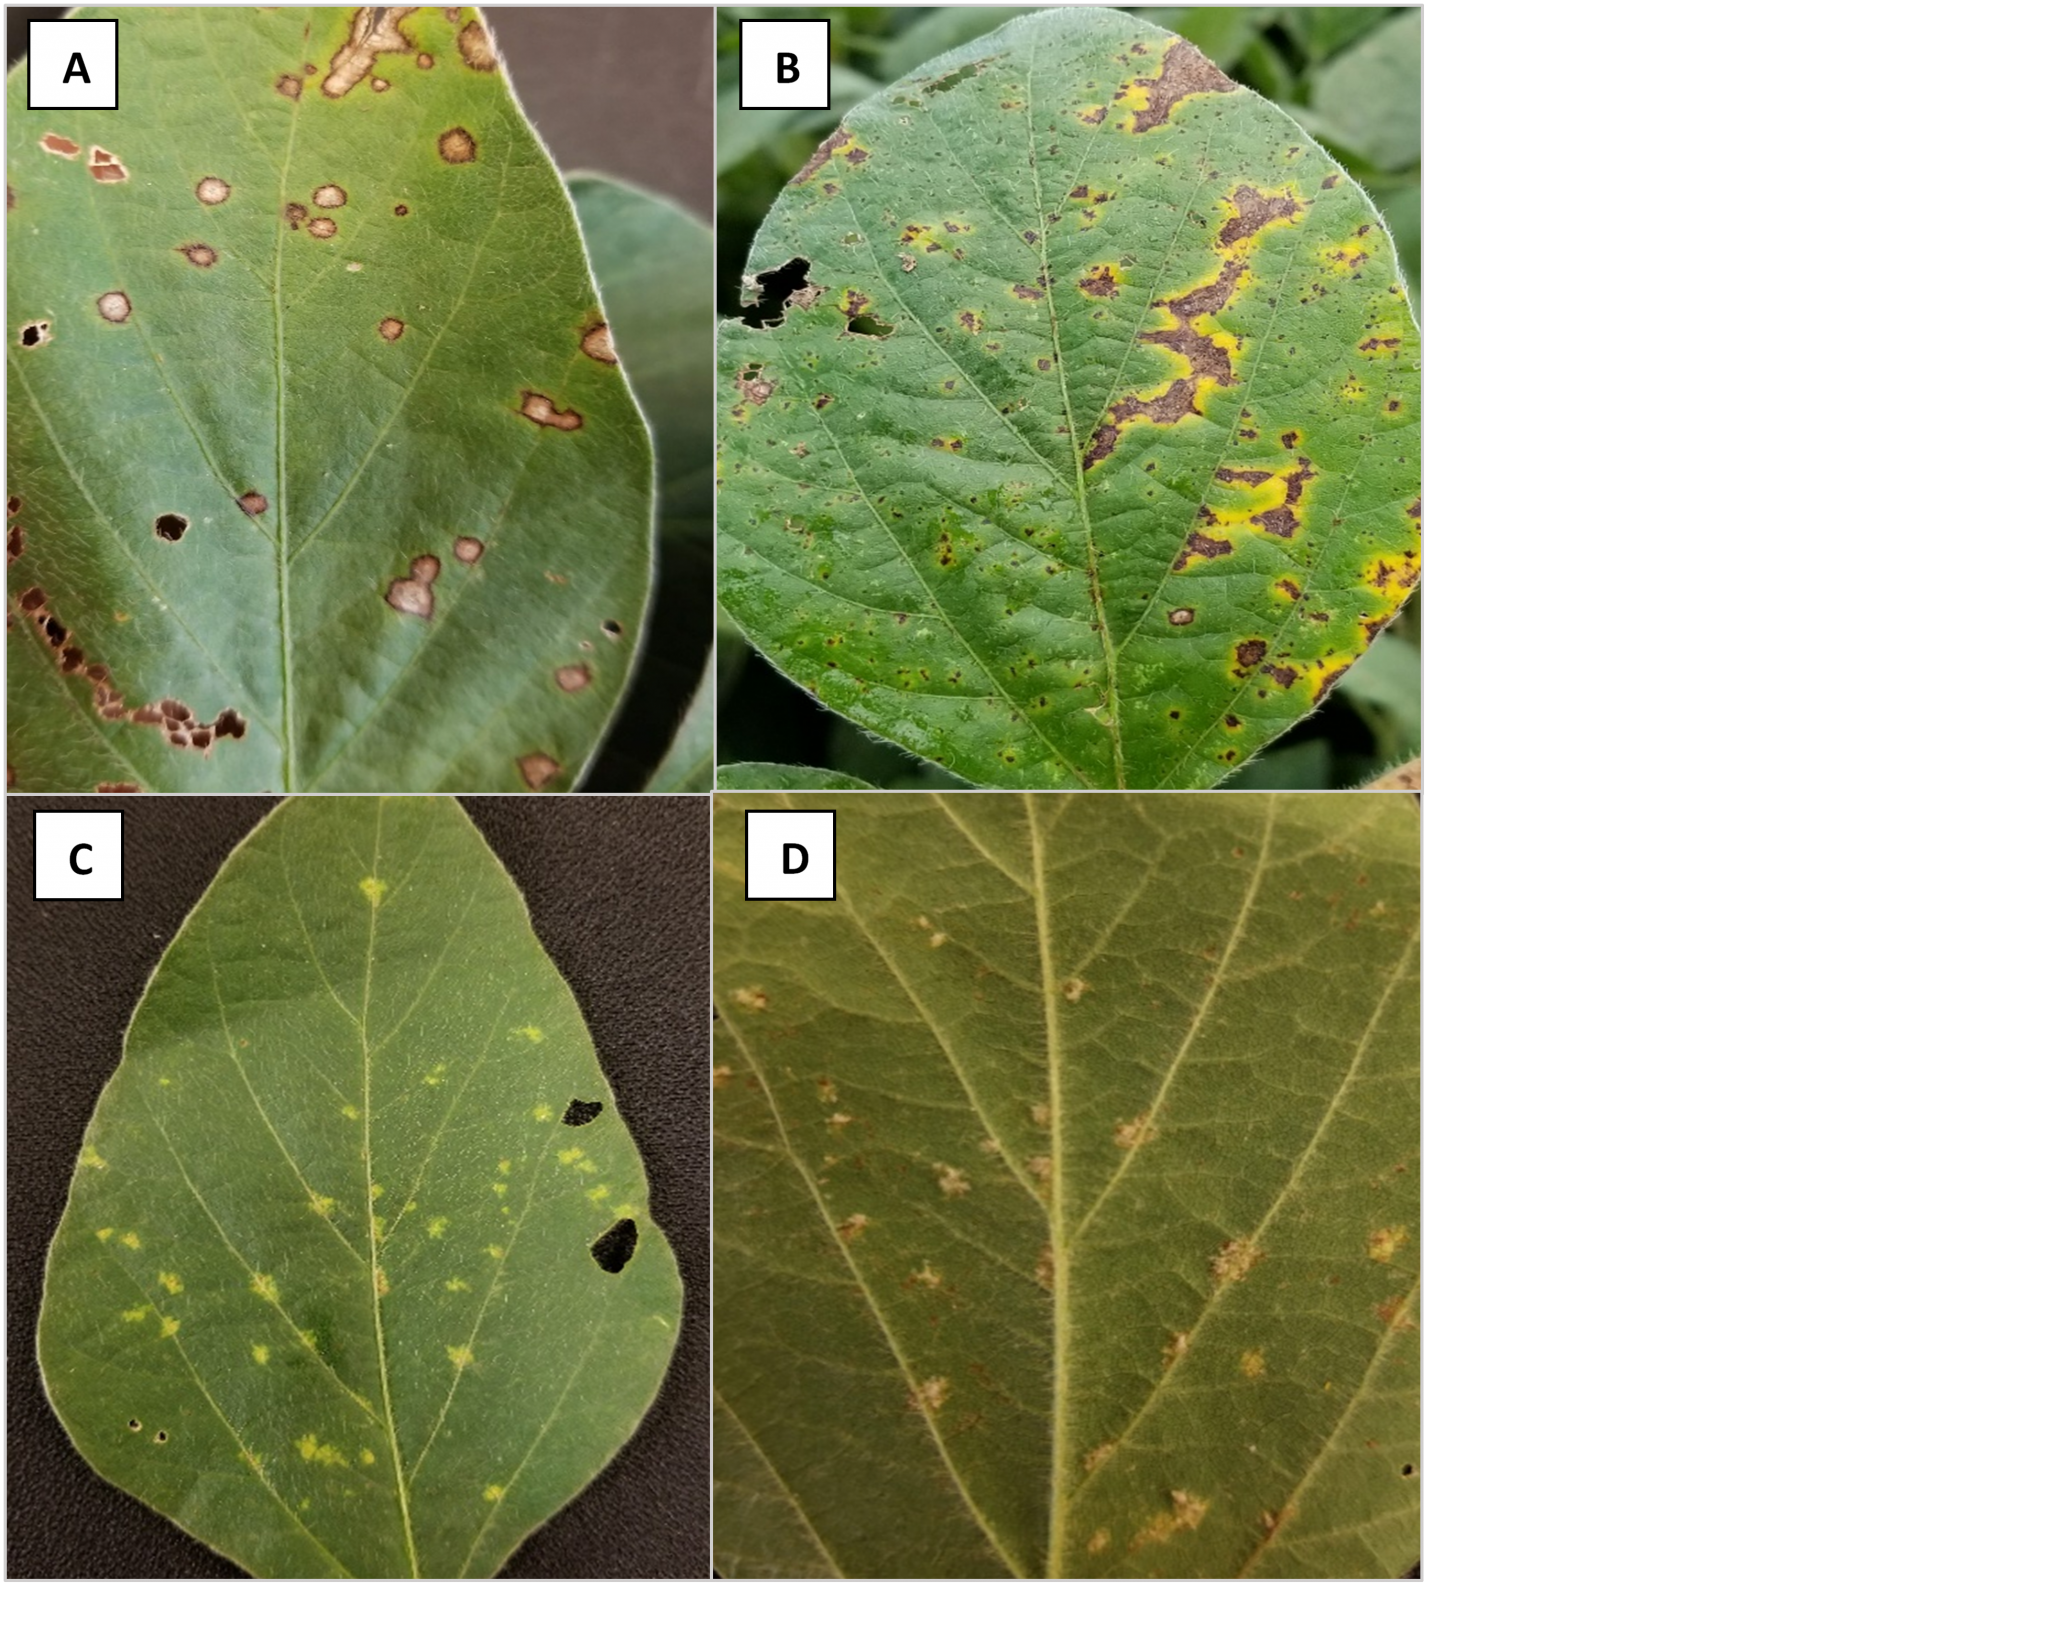 Figure 2. Foliar diseases in soybean A. frogeye leaf spot, B Septoria brown spot, C. downy mildew on upper leaf surface, D. downy mildew on lower leaf surface. Photo credit: Darcy Telenko